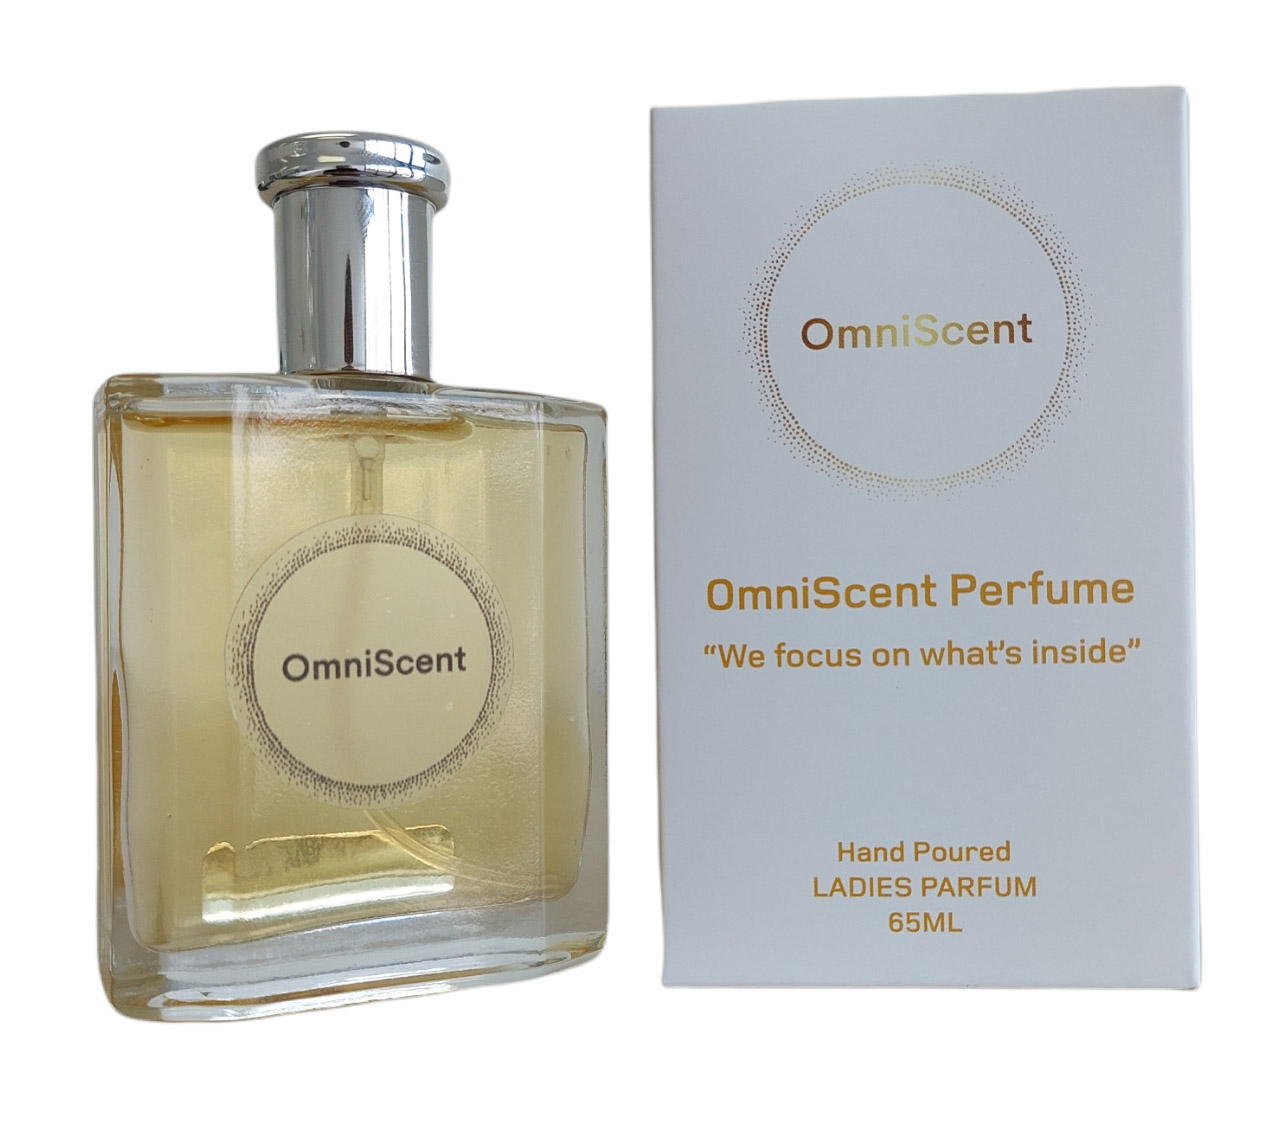 Louis Vuitton Contre Moi  Perfume, Perfume packaging, Perfume